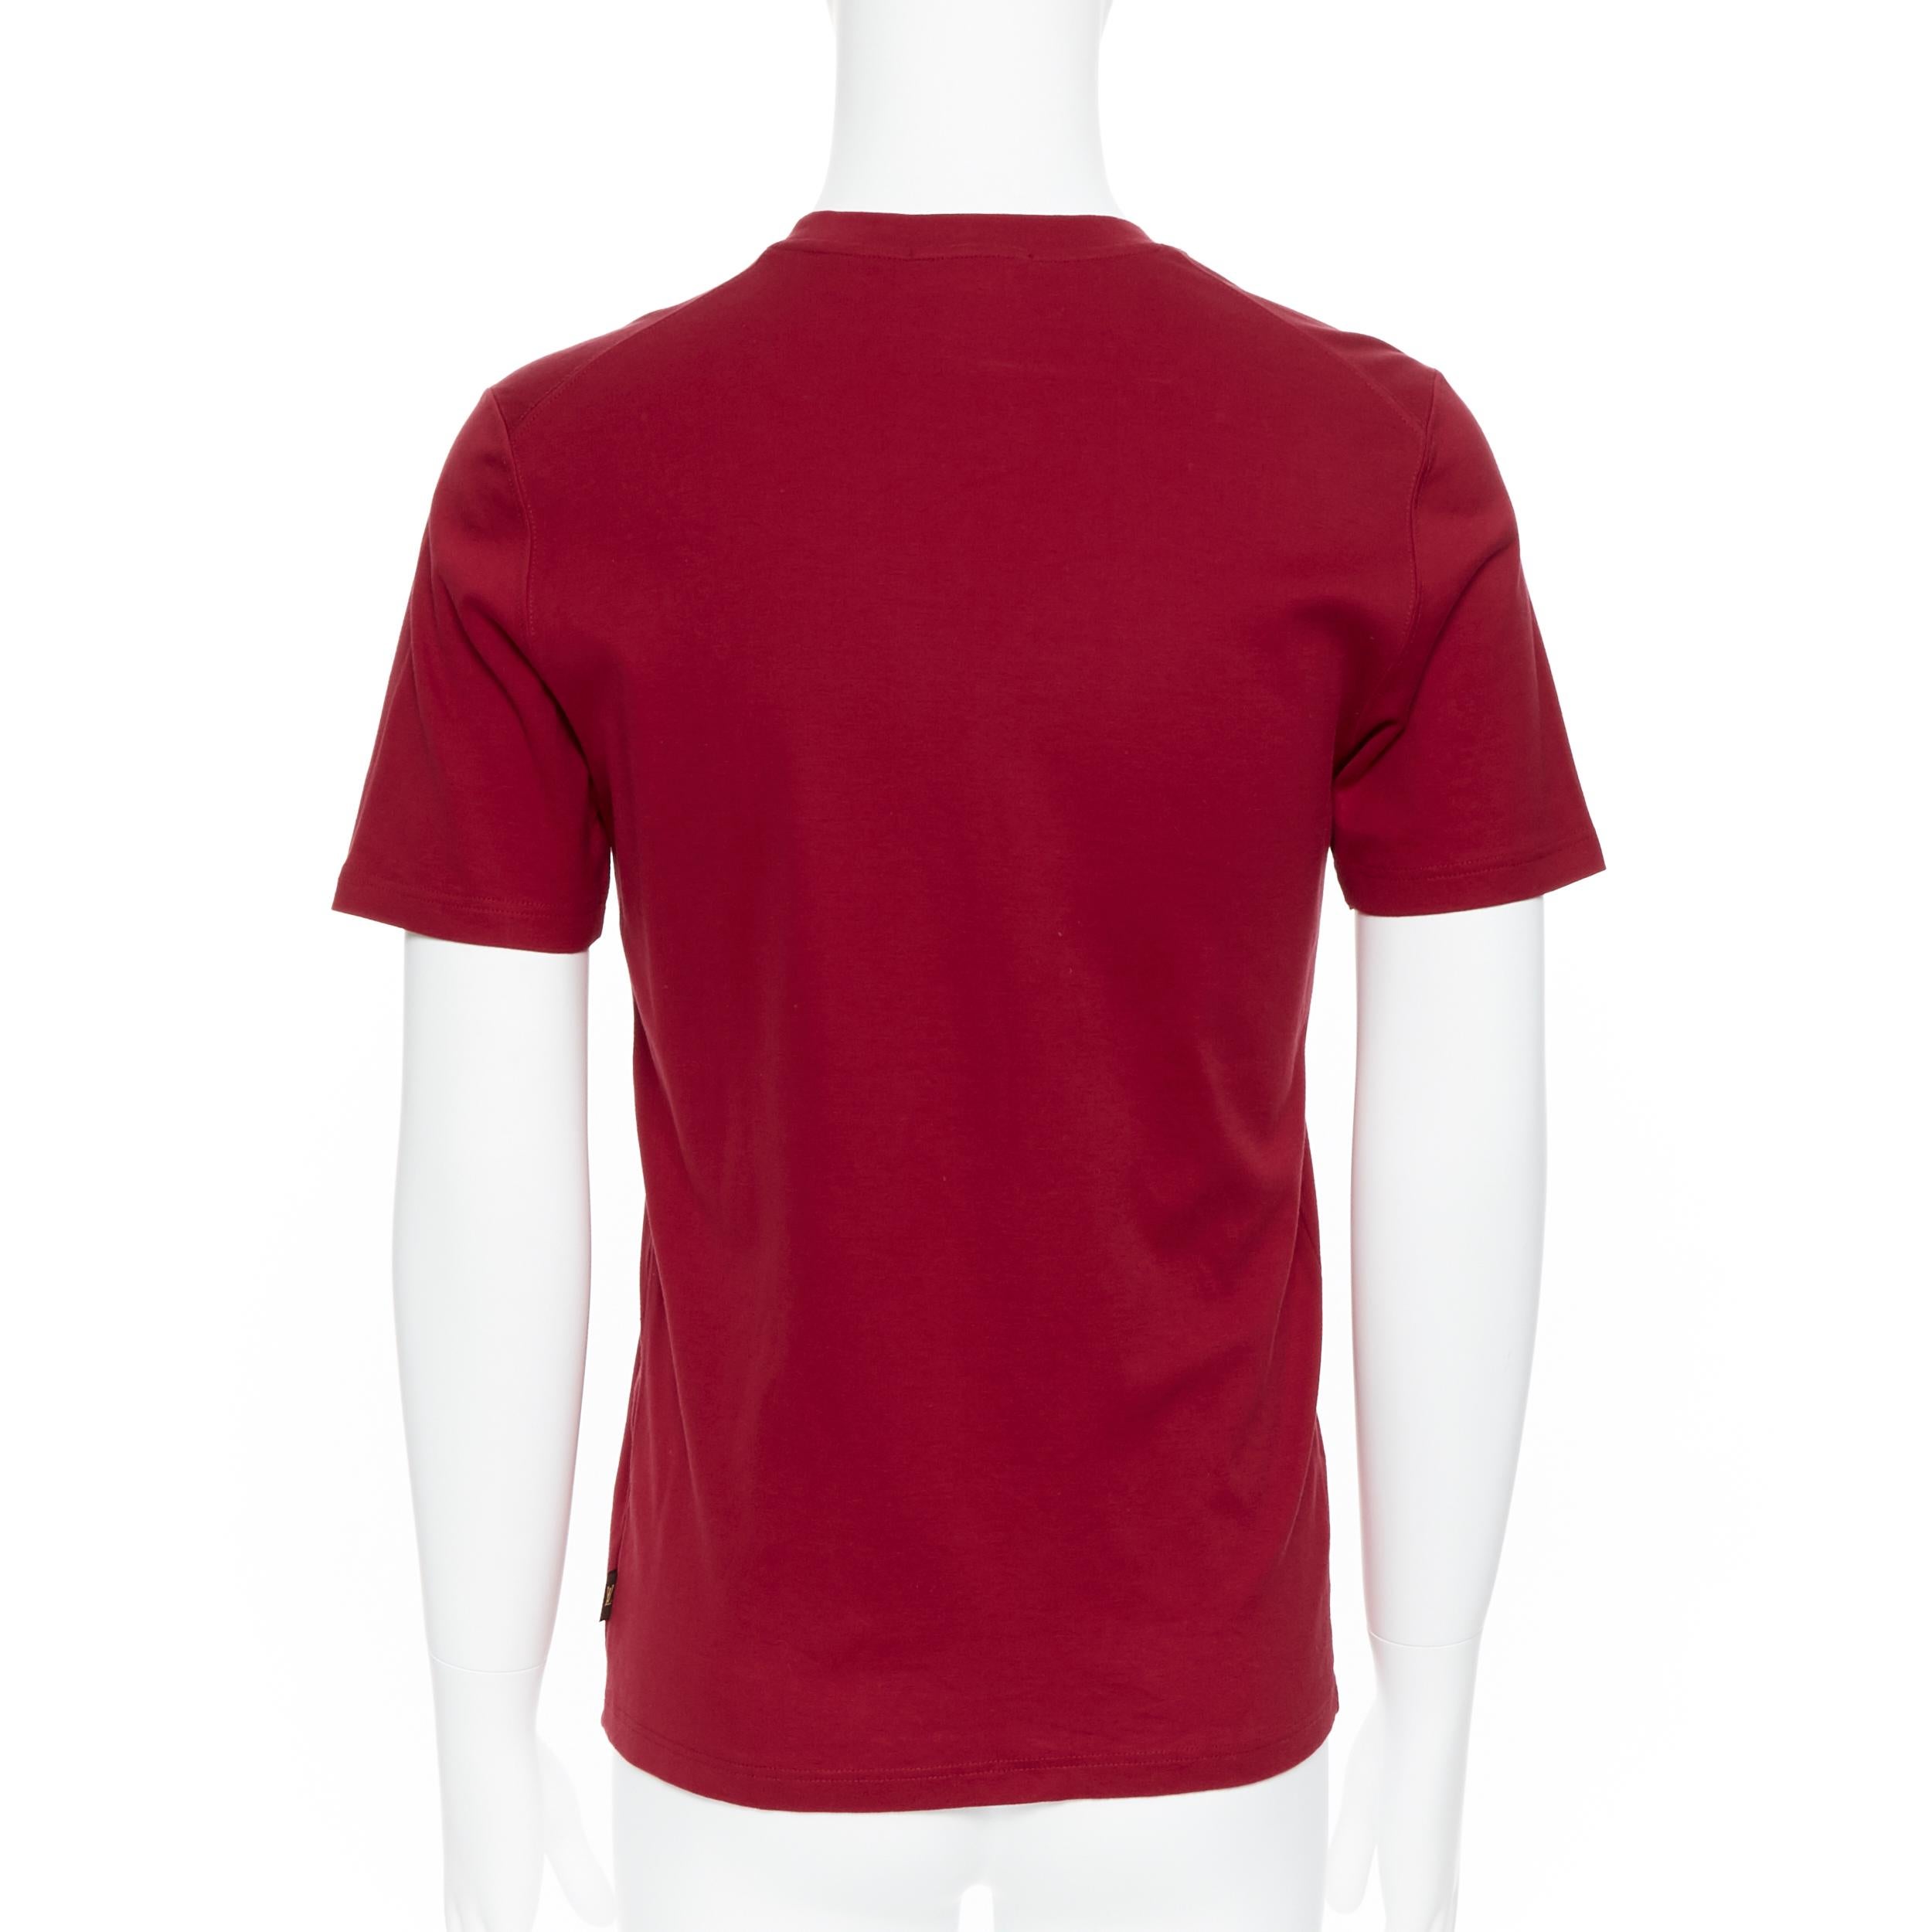 Men's LOUIS VUITTON 100% cotton red crew neck short sleeve LV logo tab t-shirt S